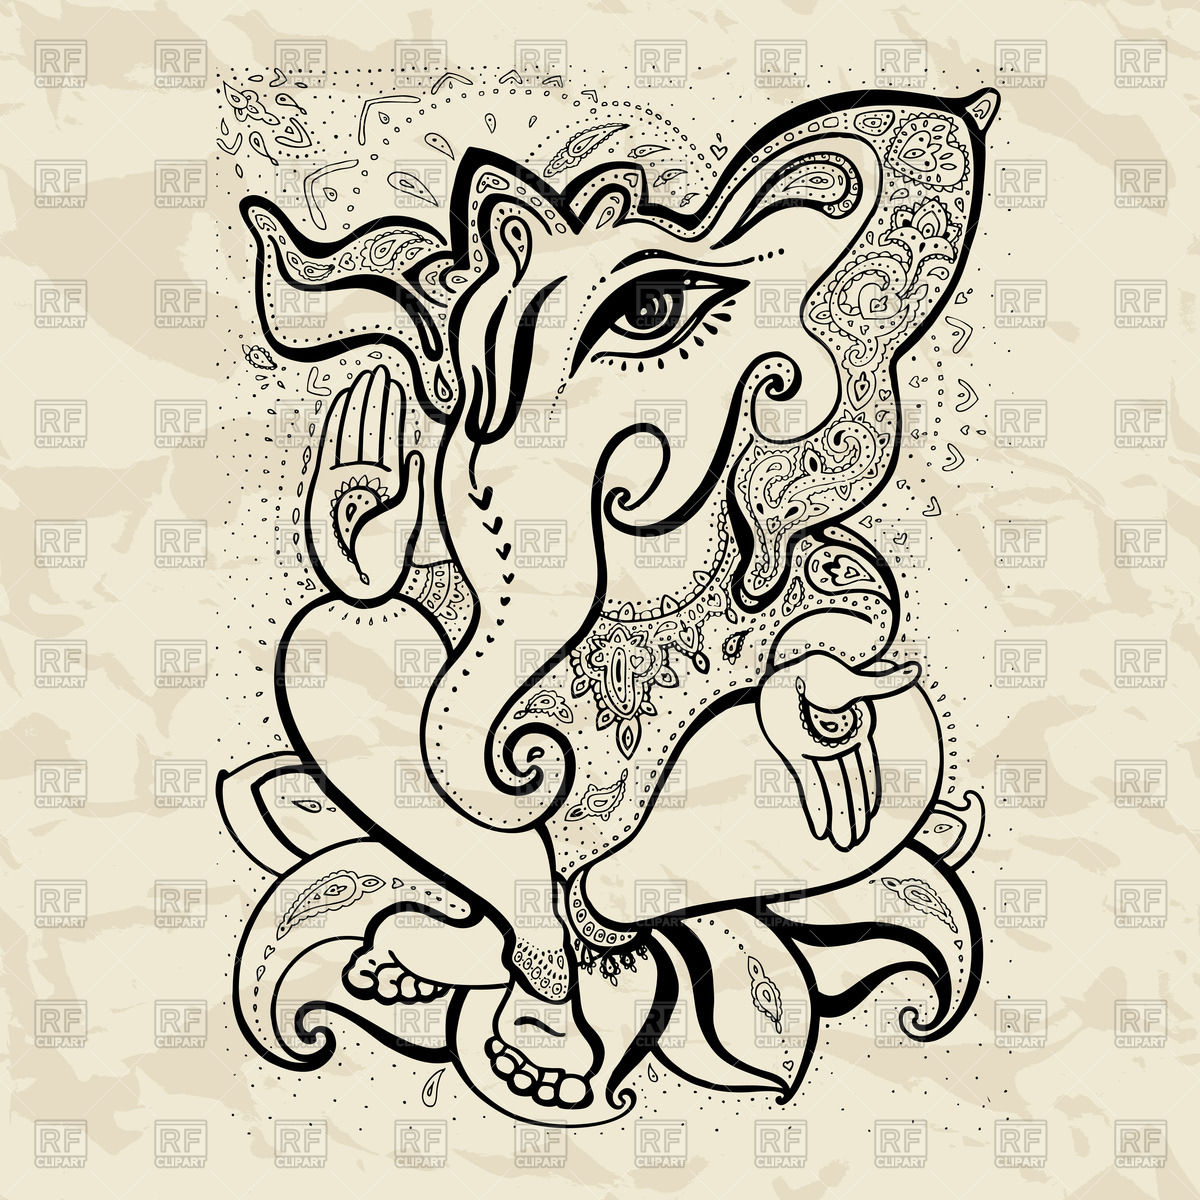 Shiva Mahadeva Hinduism Indian God Sketch Stock Vector (Royalty Free)  1482155090 | Shutterstock